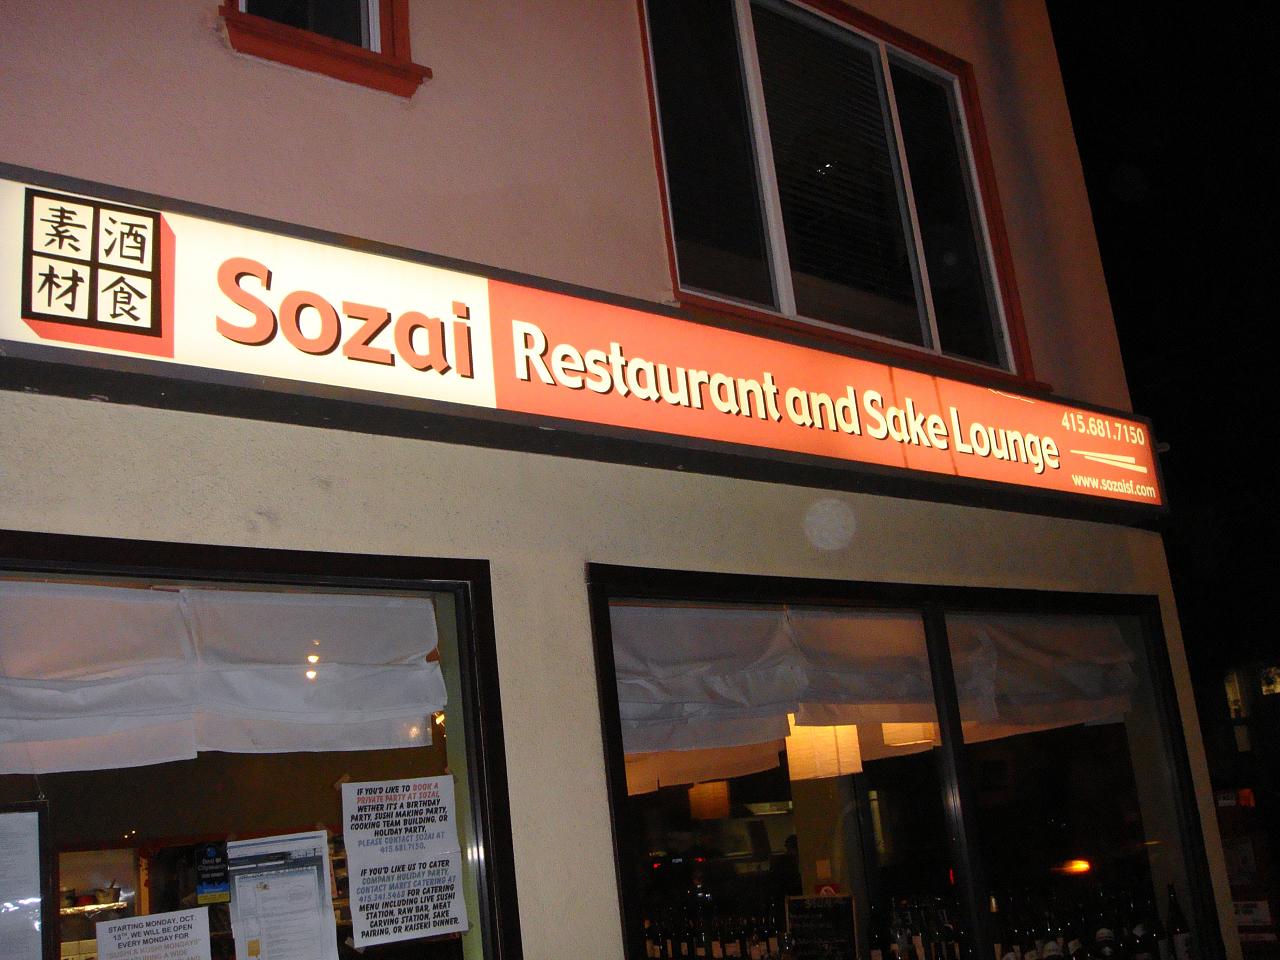 Sozai Restaurant